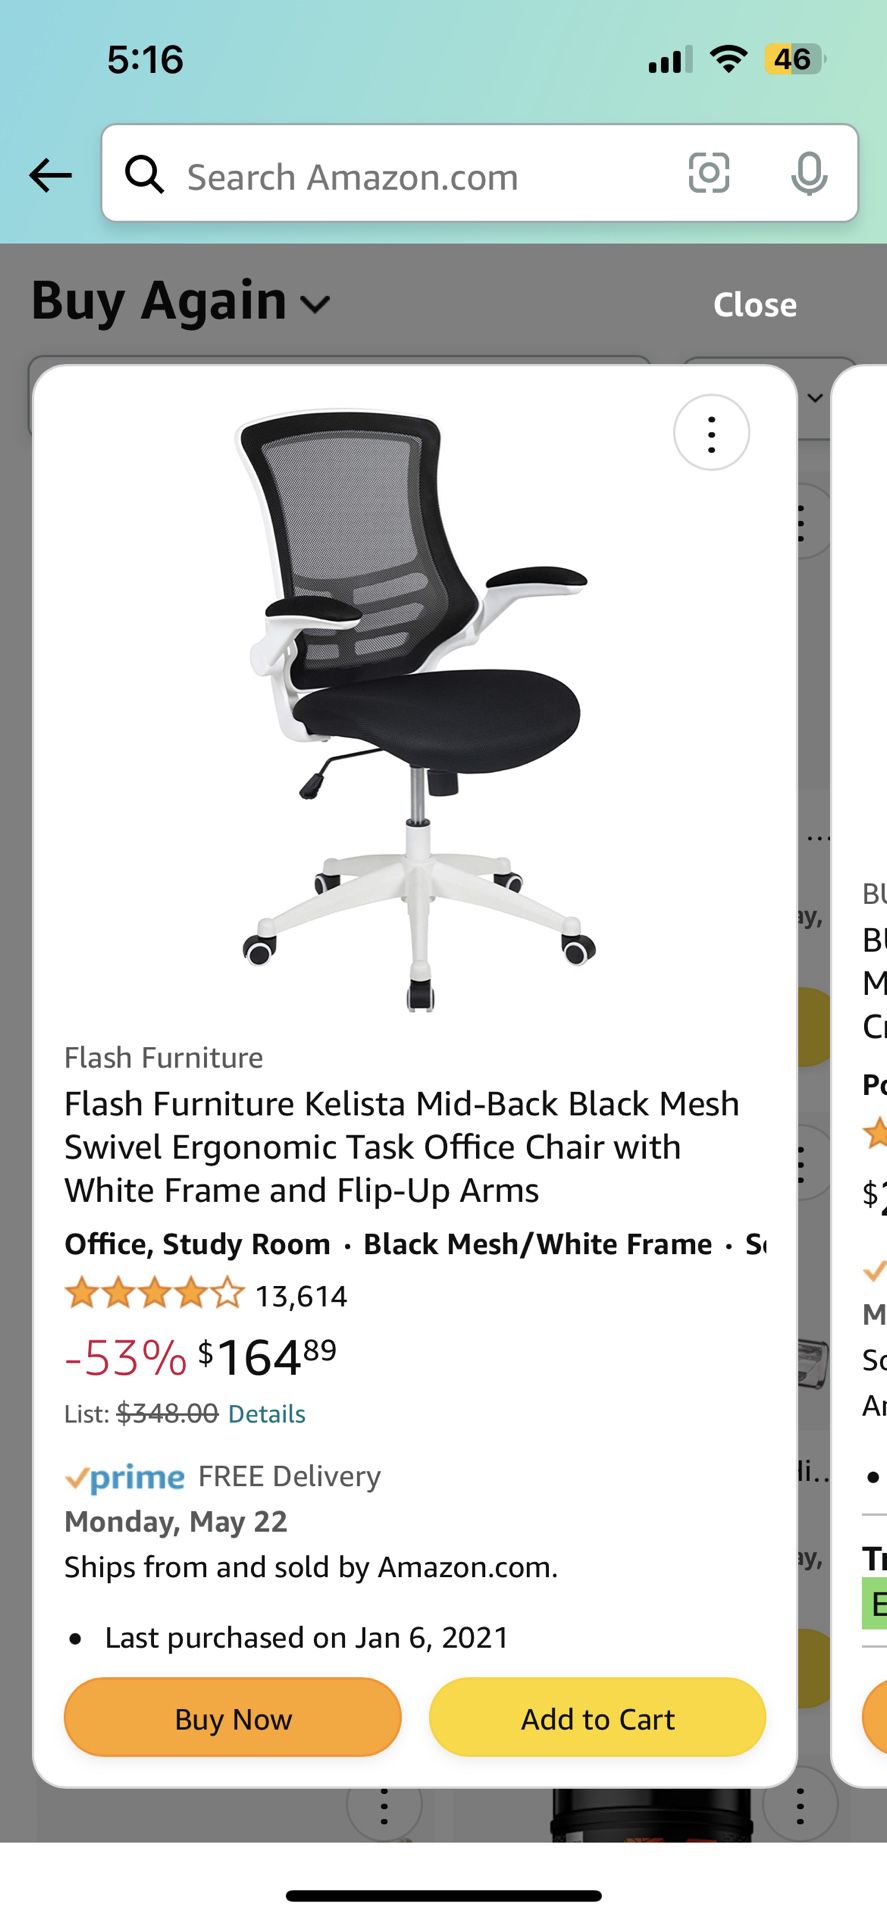 Modern White Office Chair